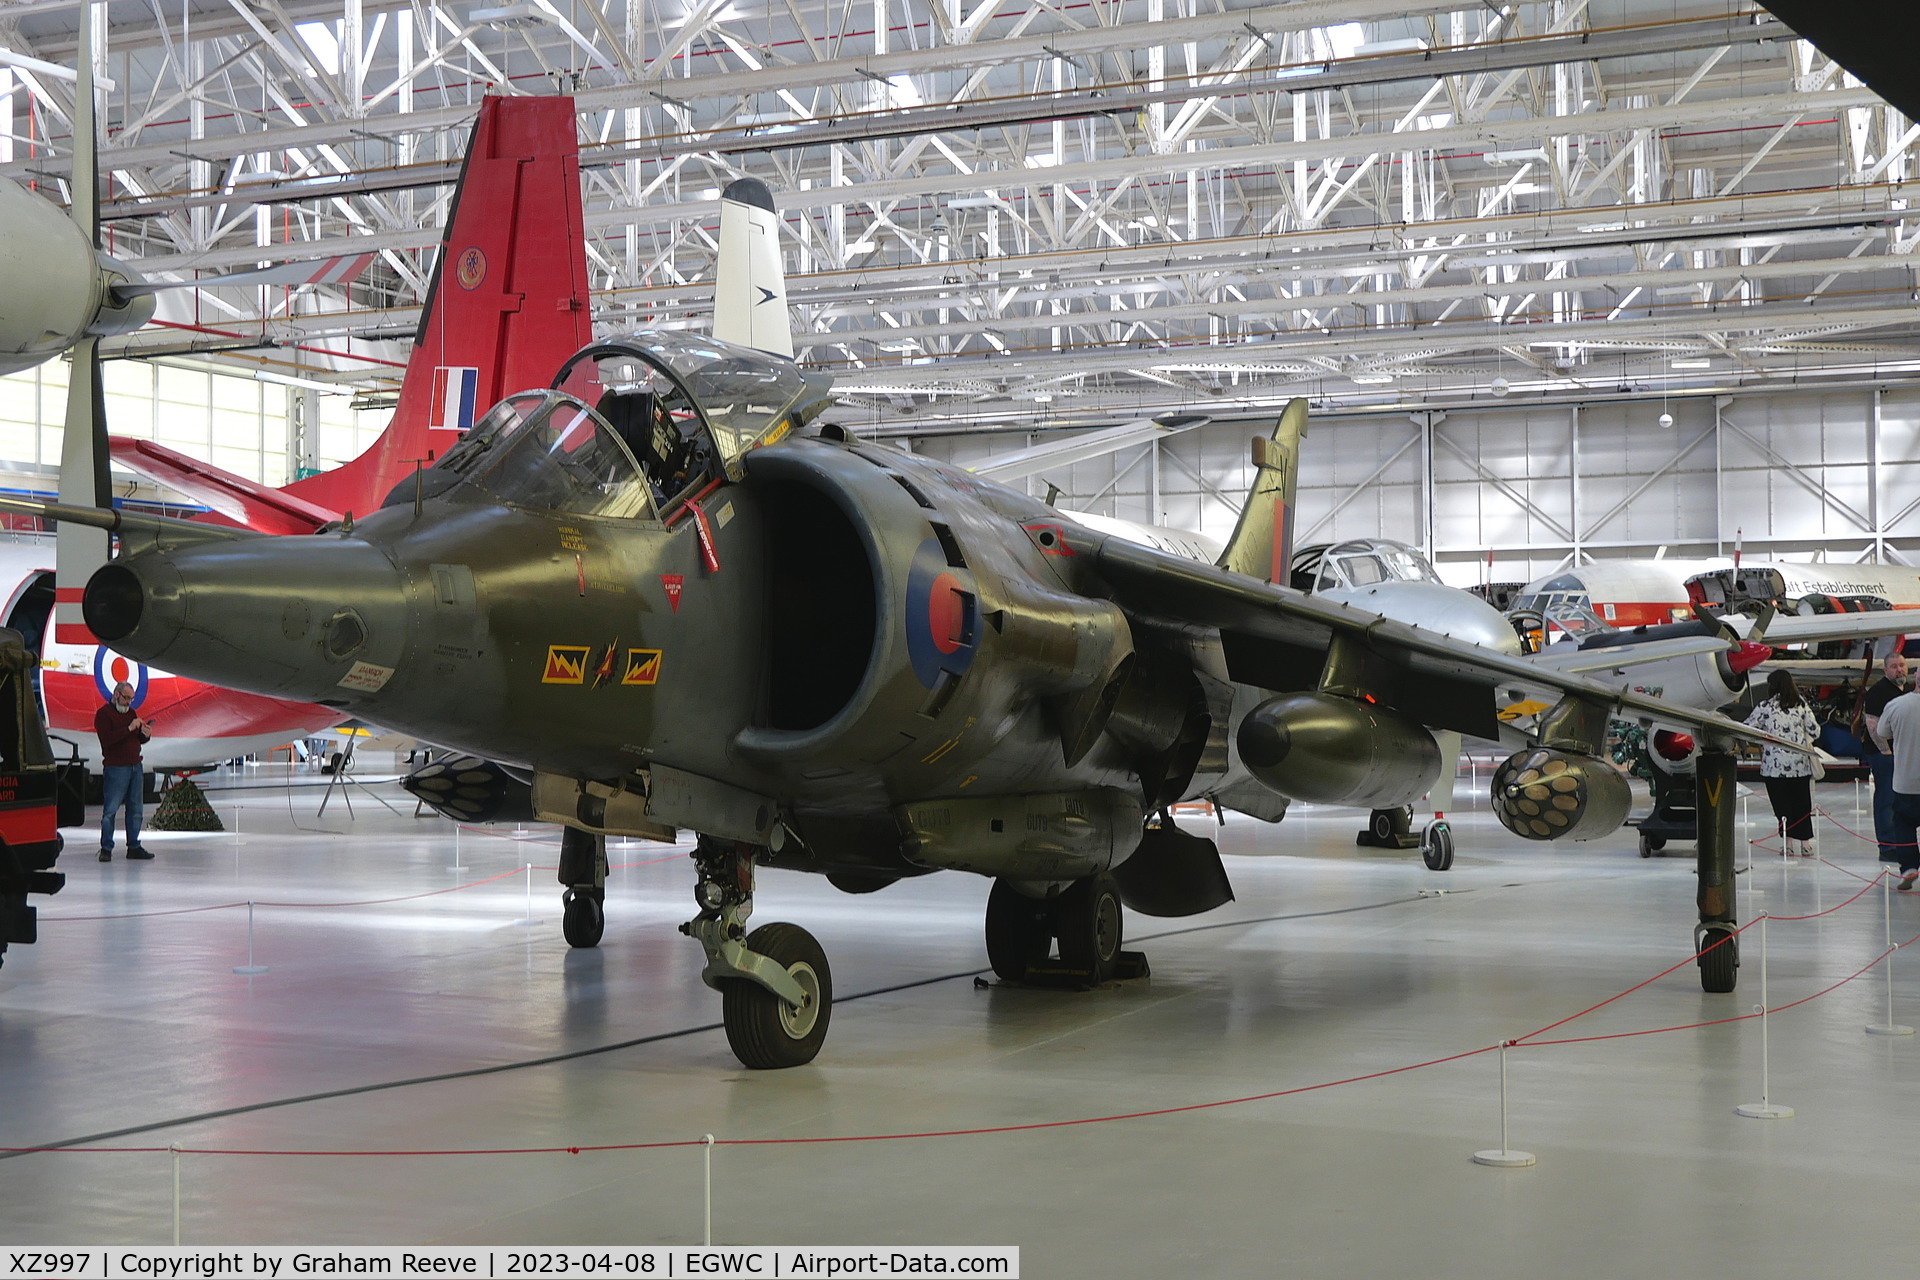 XZ997, British Aerospace Harrier GR.3 C/N 712220, On display at the RAF Museum, Cosford.